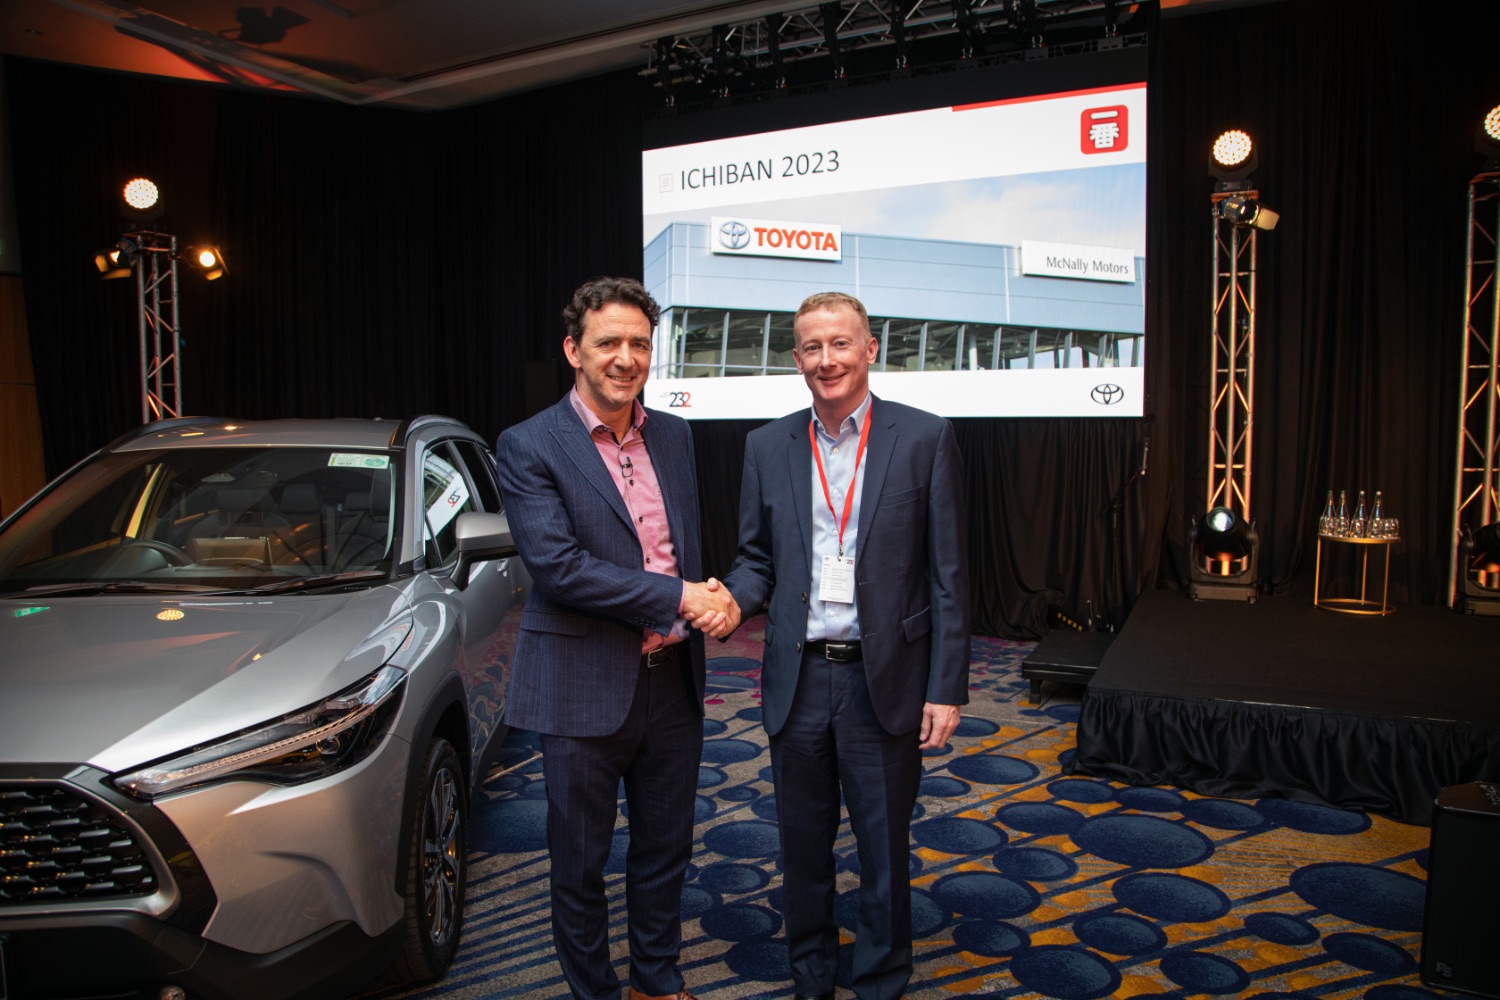 McNally Motors gets Toyota Ichiban award